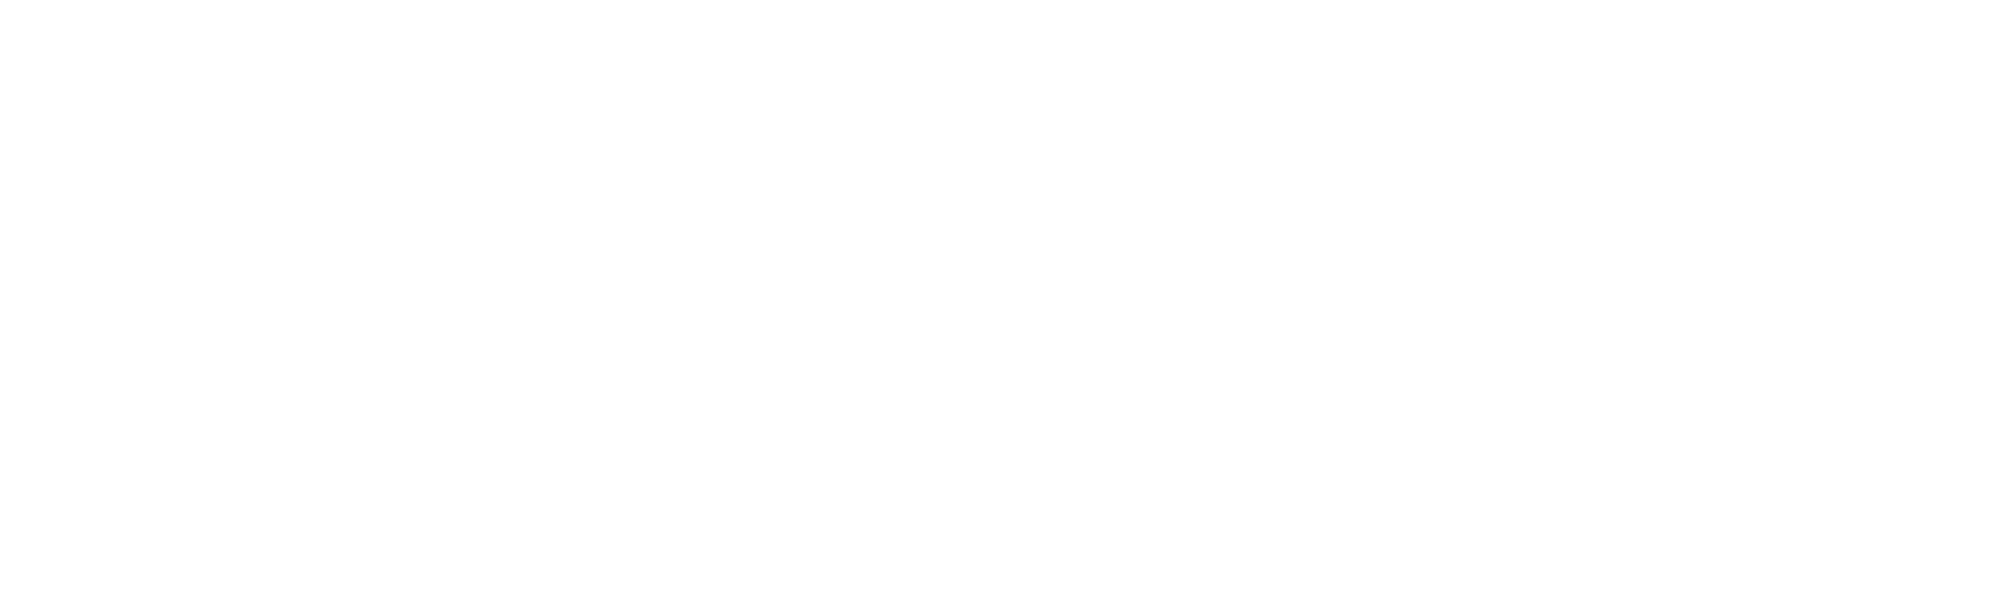 Robert Burns Birthday Celebration, January 22, 2022